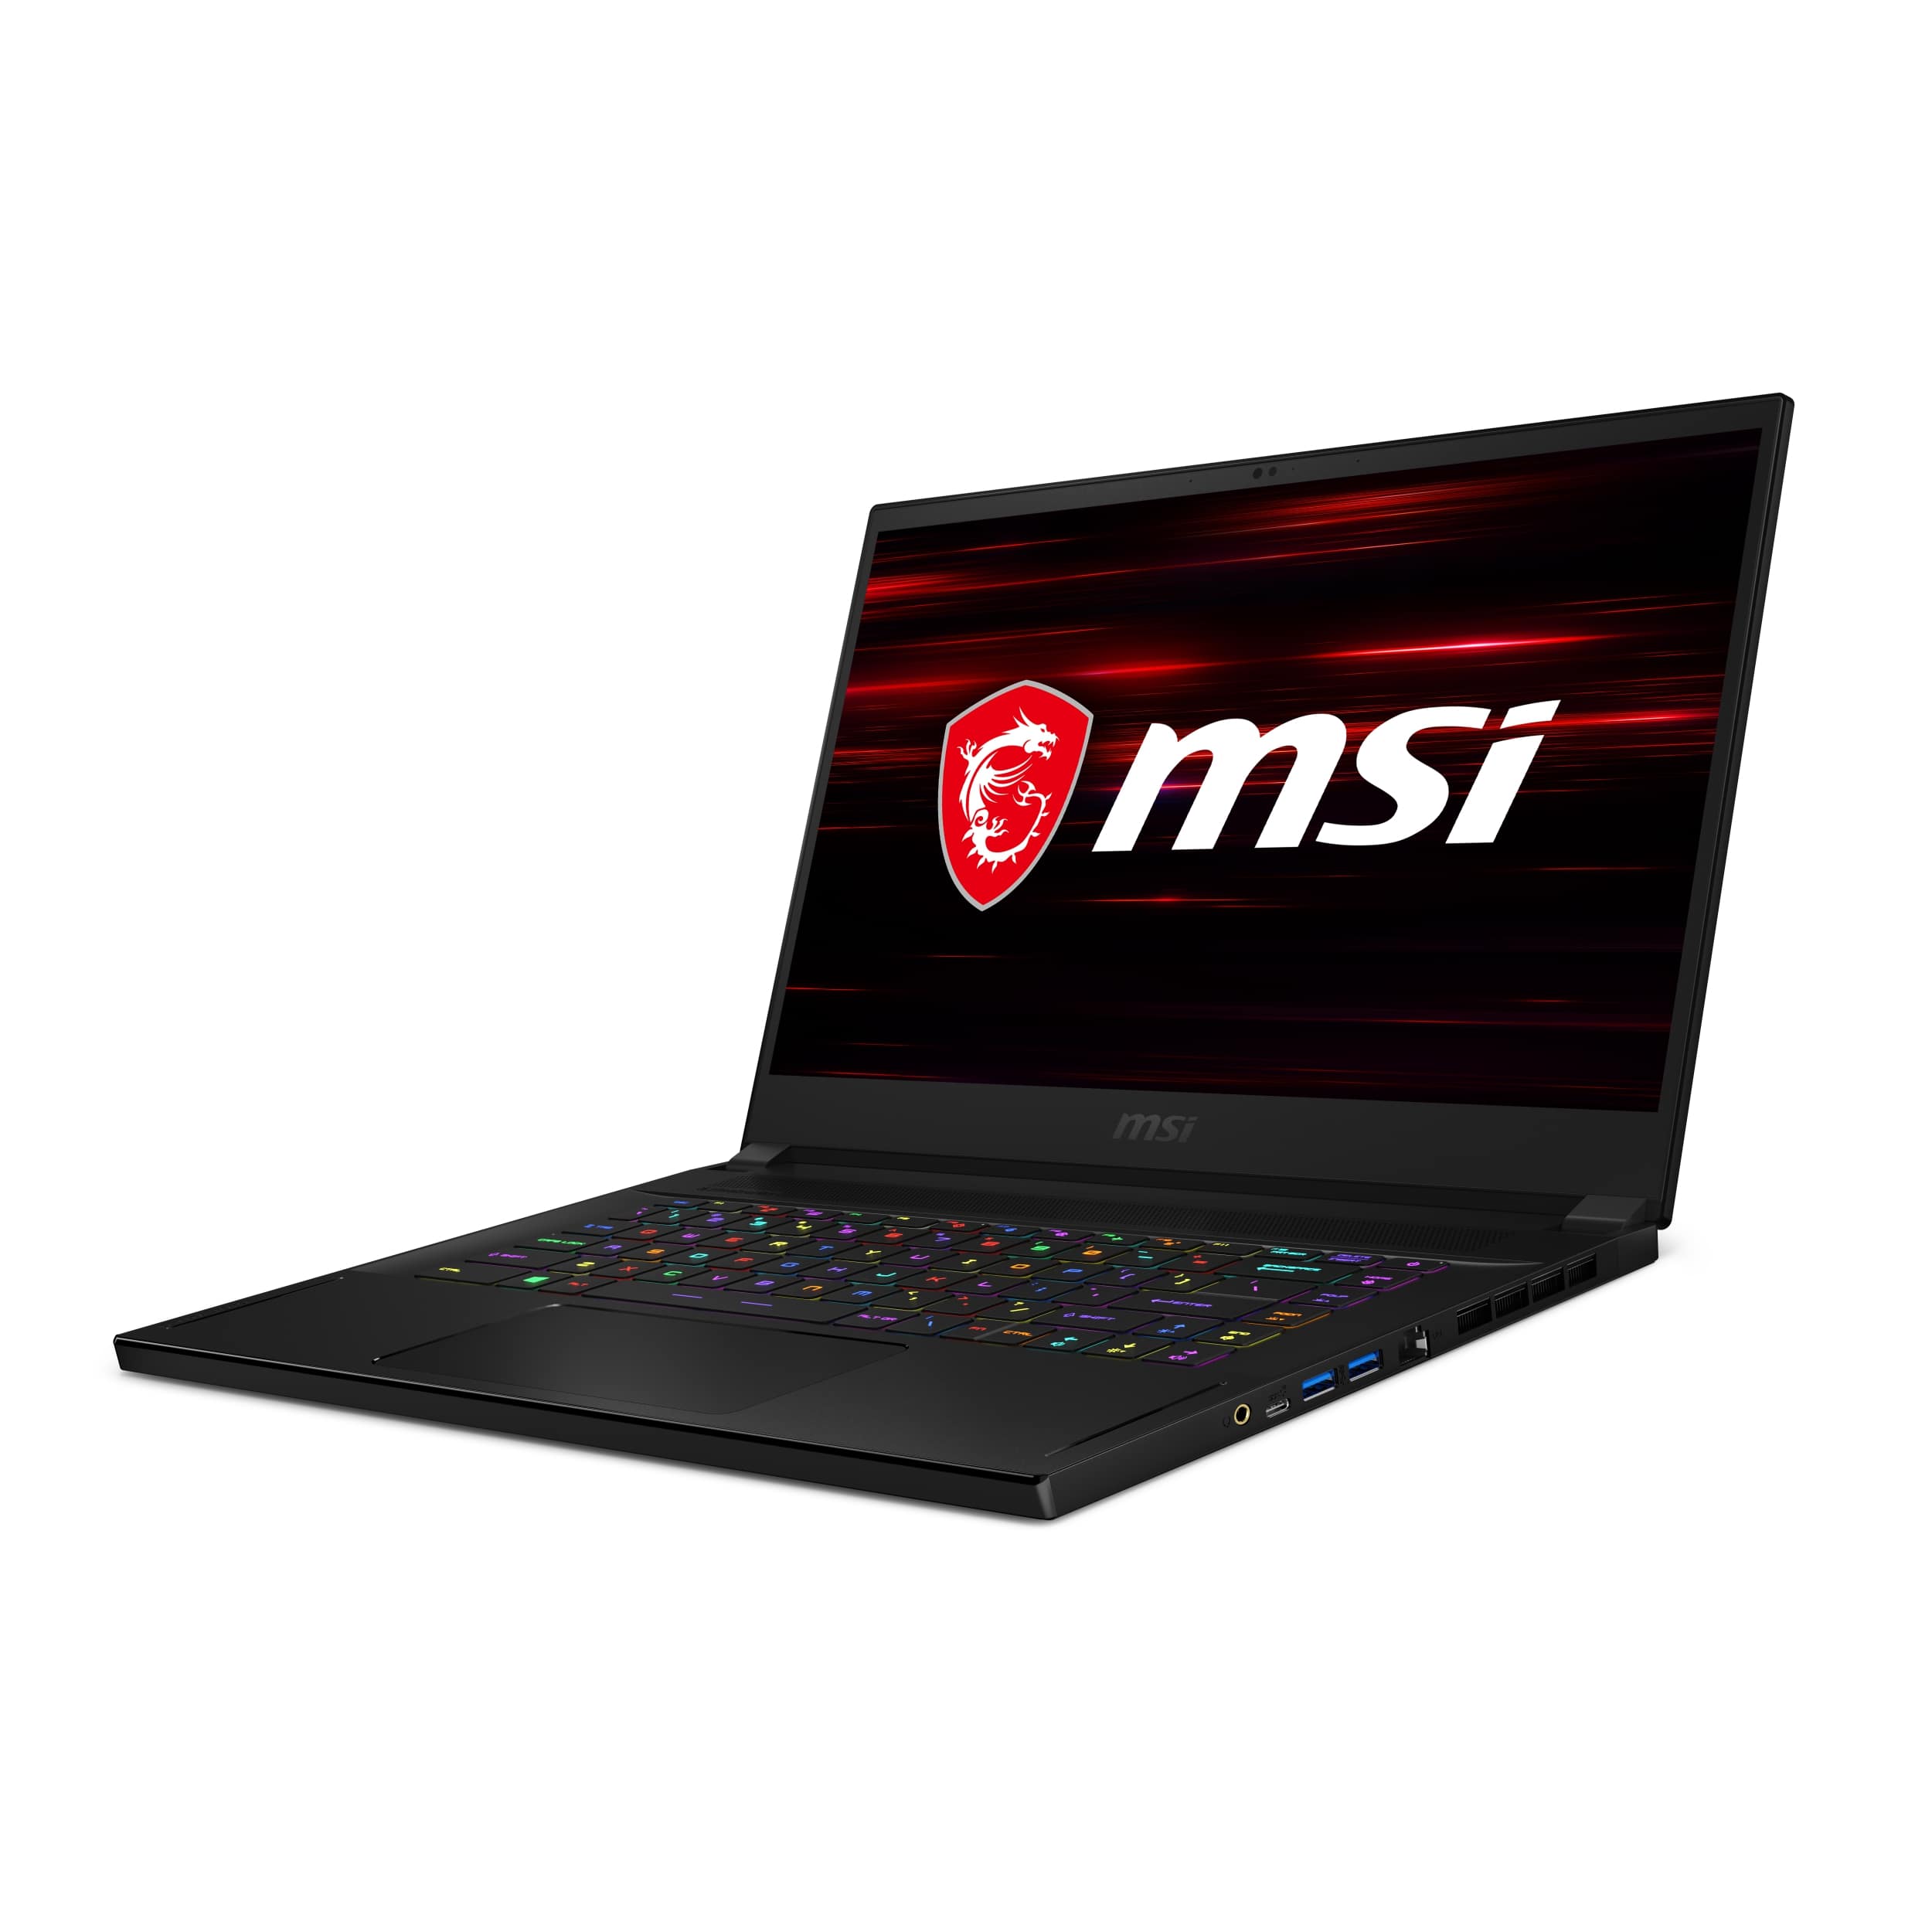 MSI GS66 Stealth 15.6" Gaming Laptop - Intel Core i7-10750H - 16GB - 512GB SSD - NVIDIA GeForce RTX2060 - Windows 10 Pro - Core Black - image 2 of 5